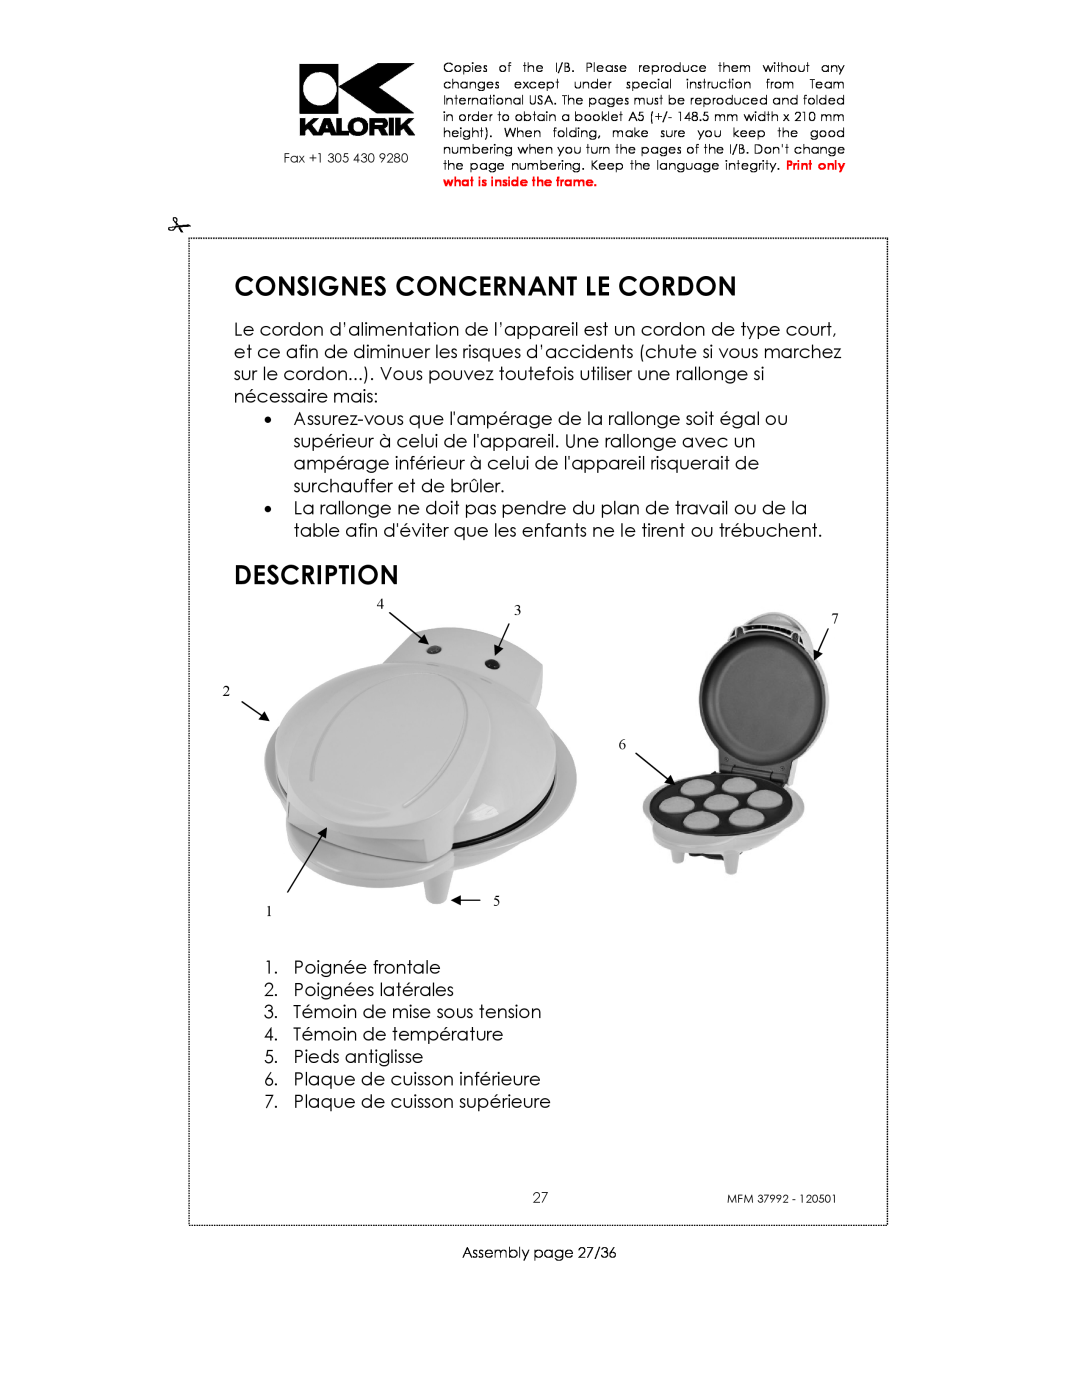 Kalorik MFM 37992 manual Consignes Concernant Le Cordon, Description 